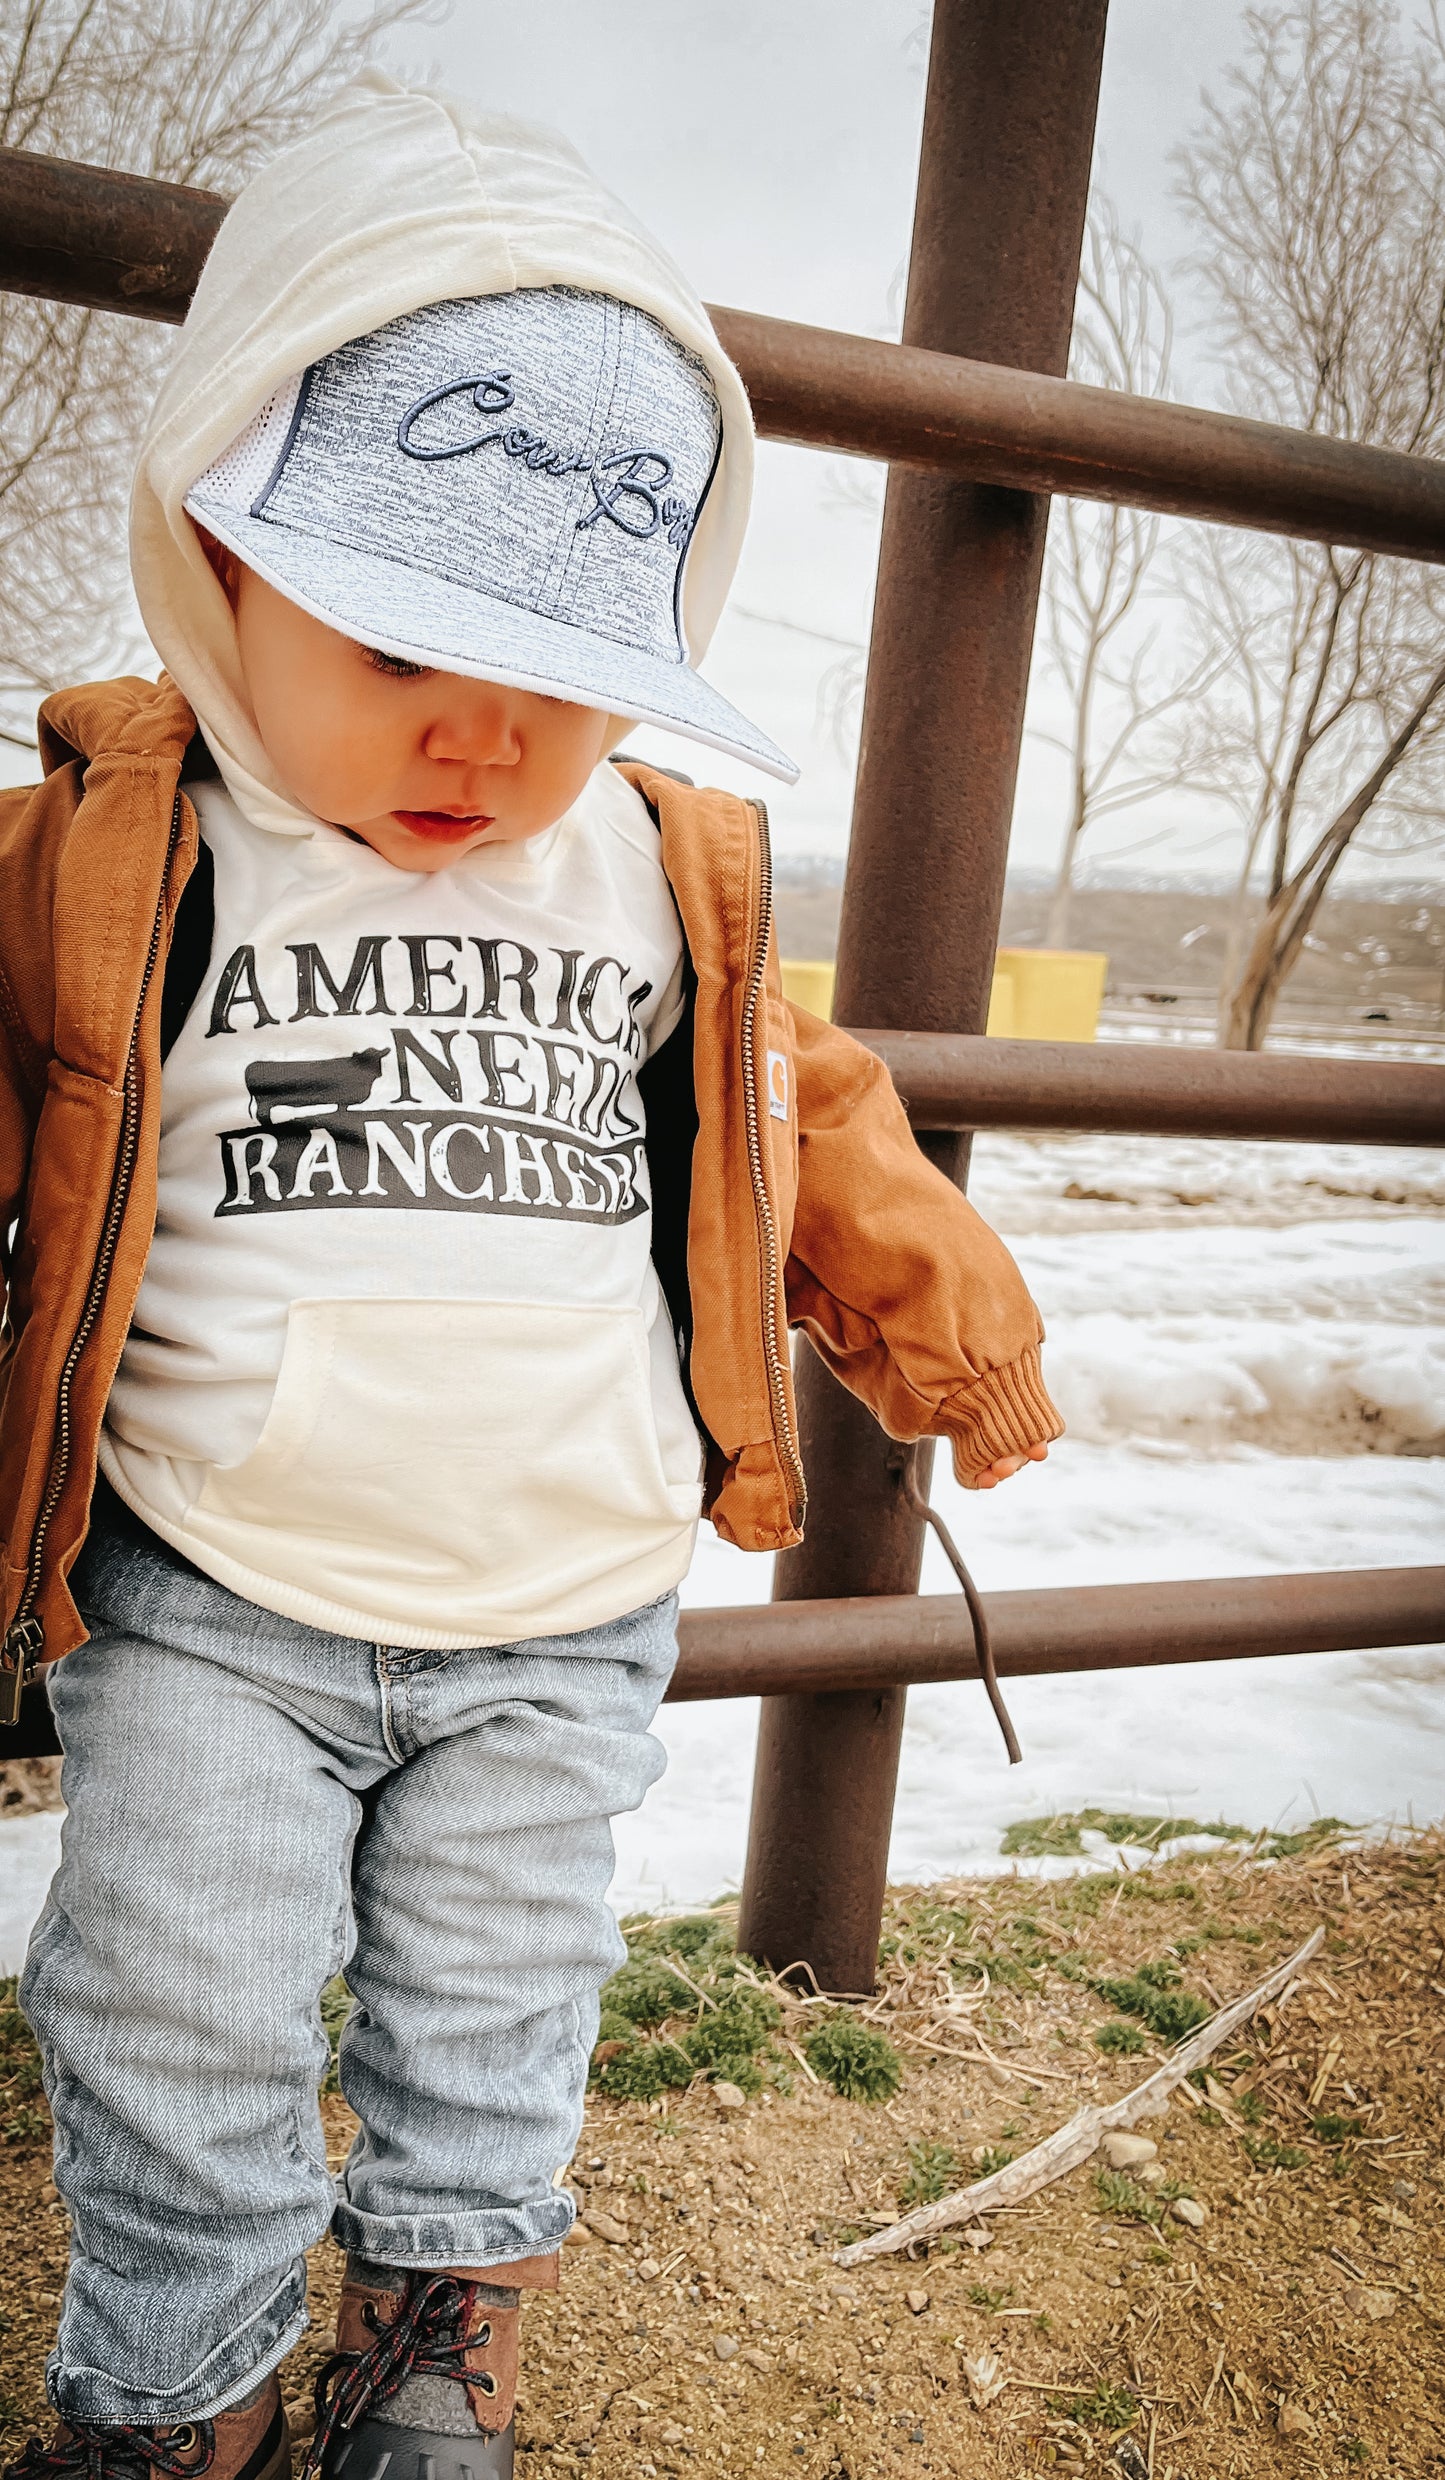 the America |Needs| Ranchers hoodie